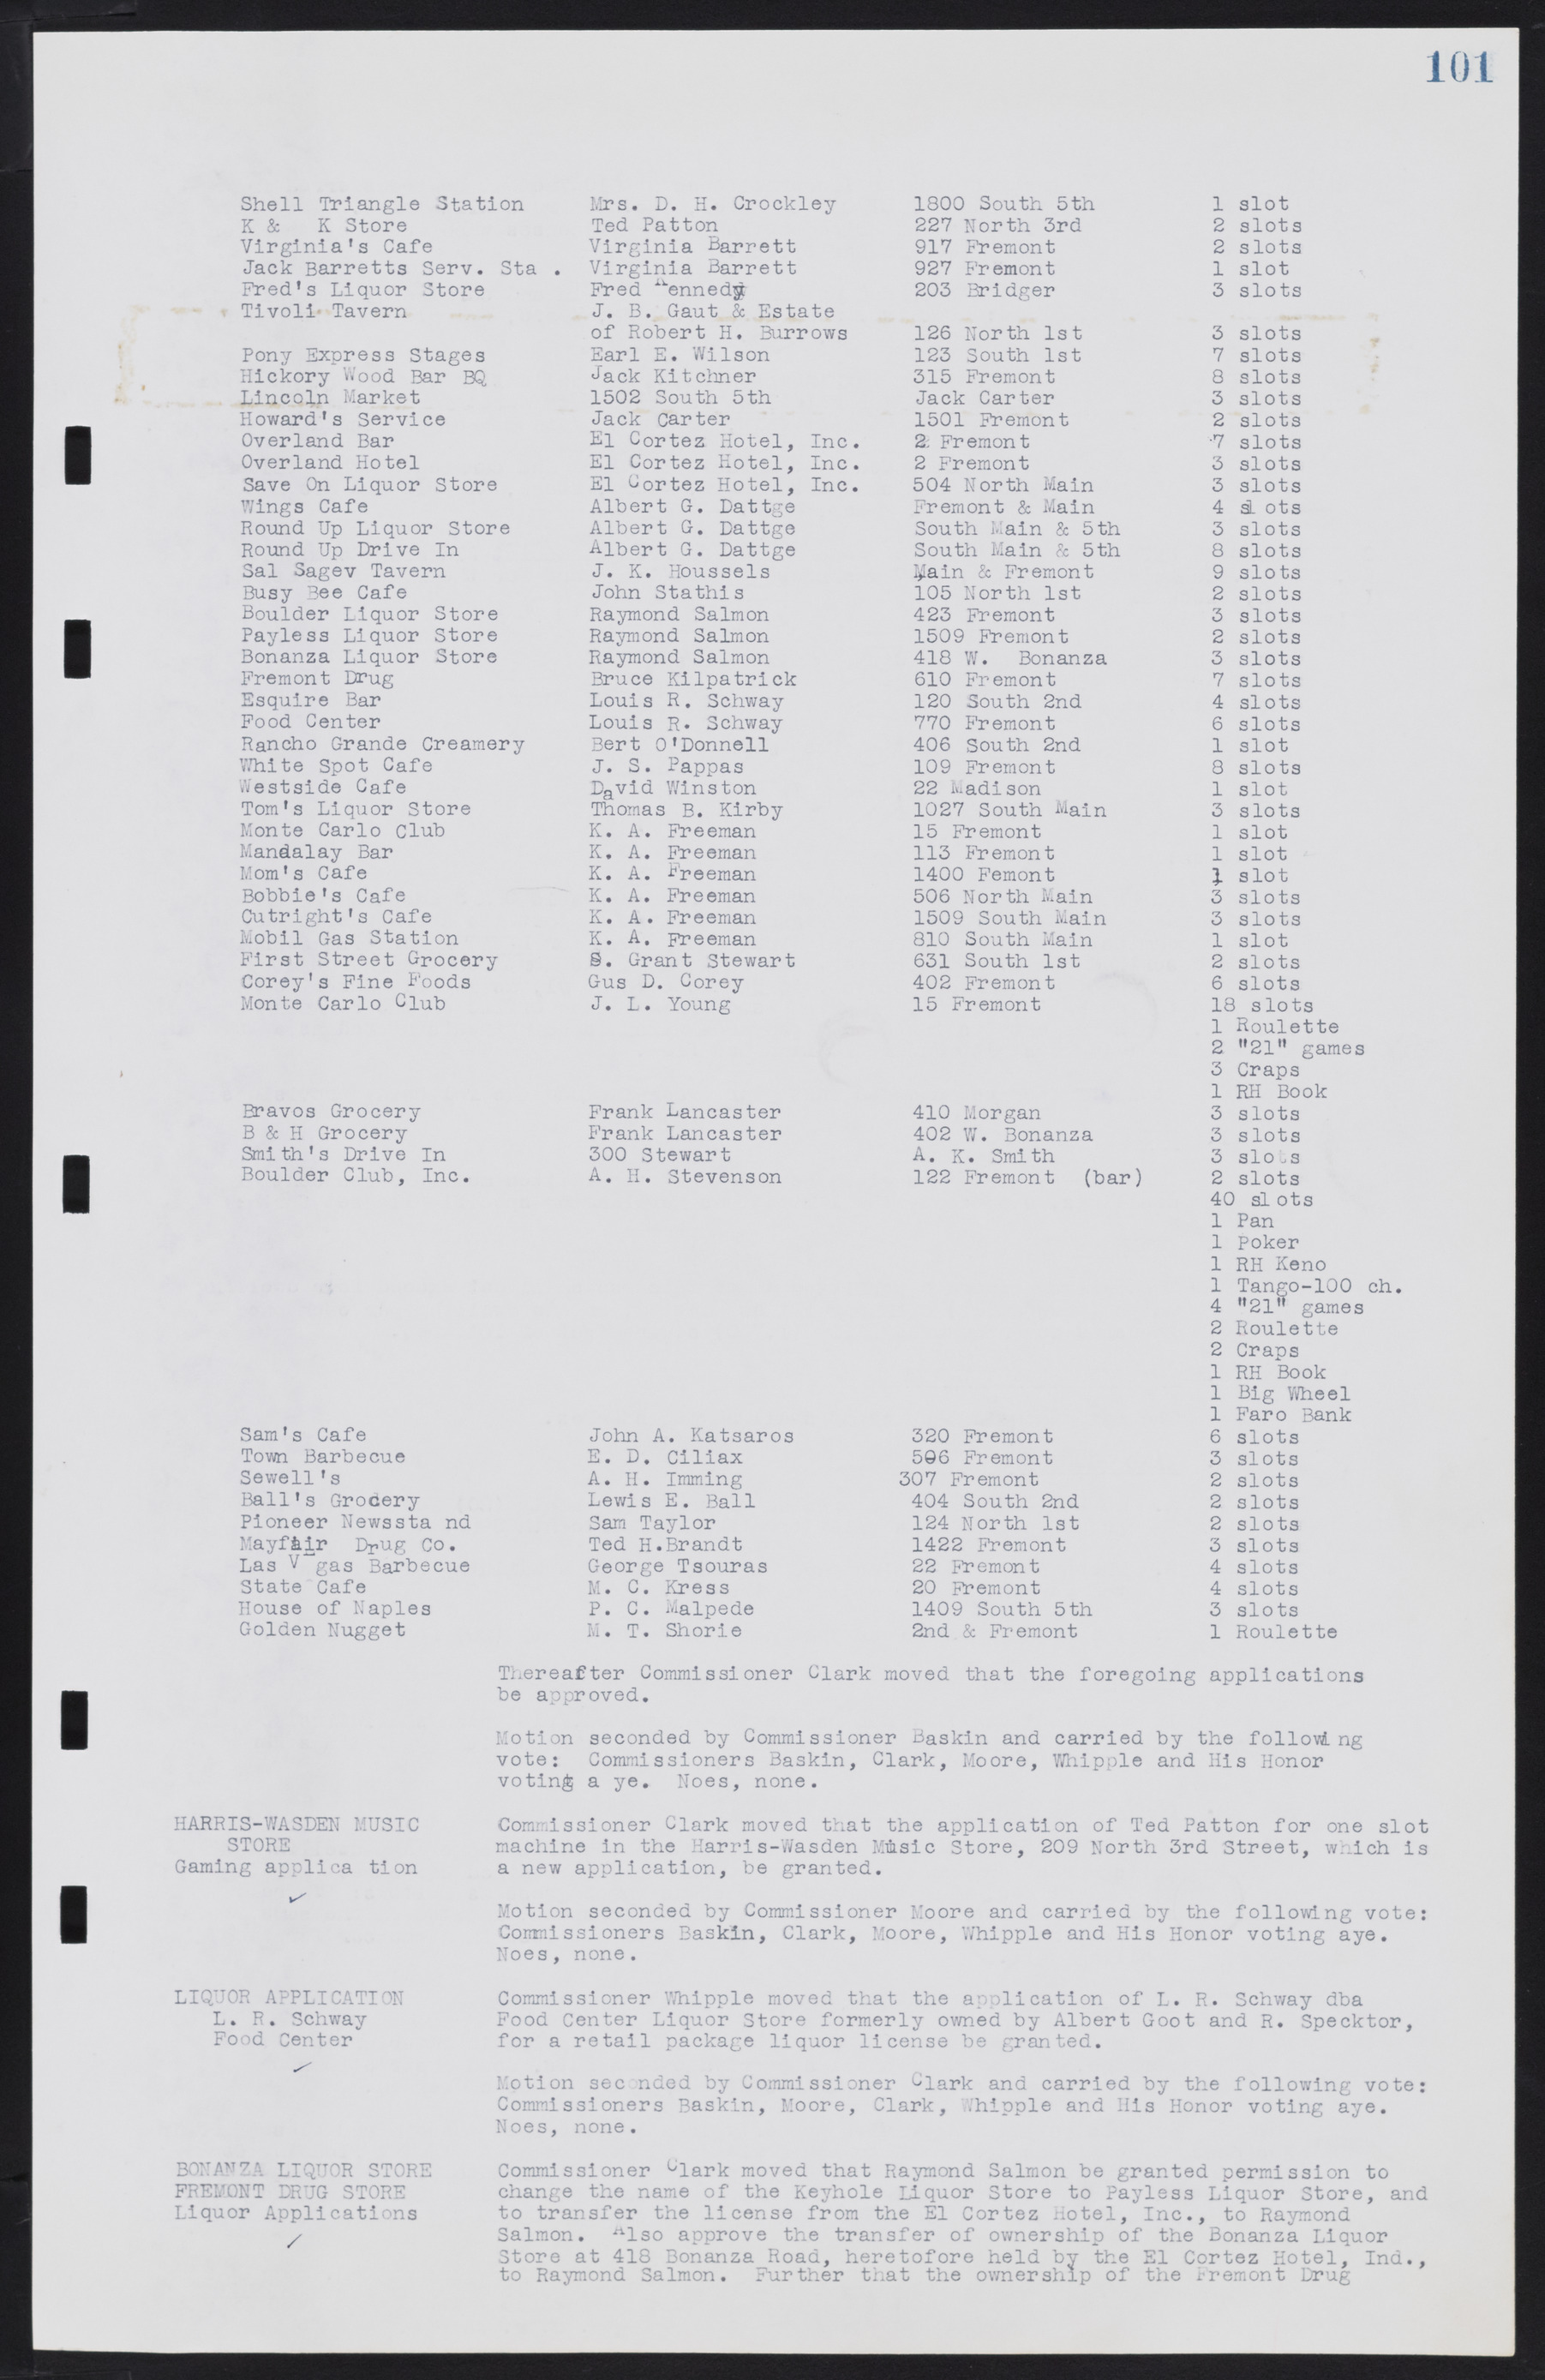 Las Vegas City Commission Minutes, January 7, 1947 to October 26, 1949, lvc000006-119